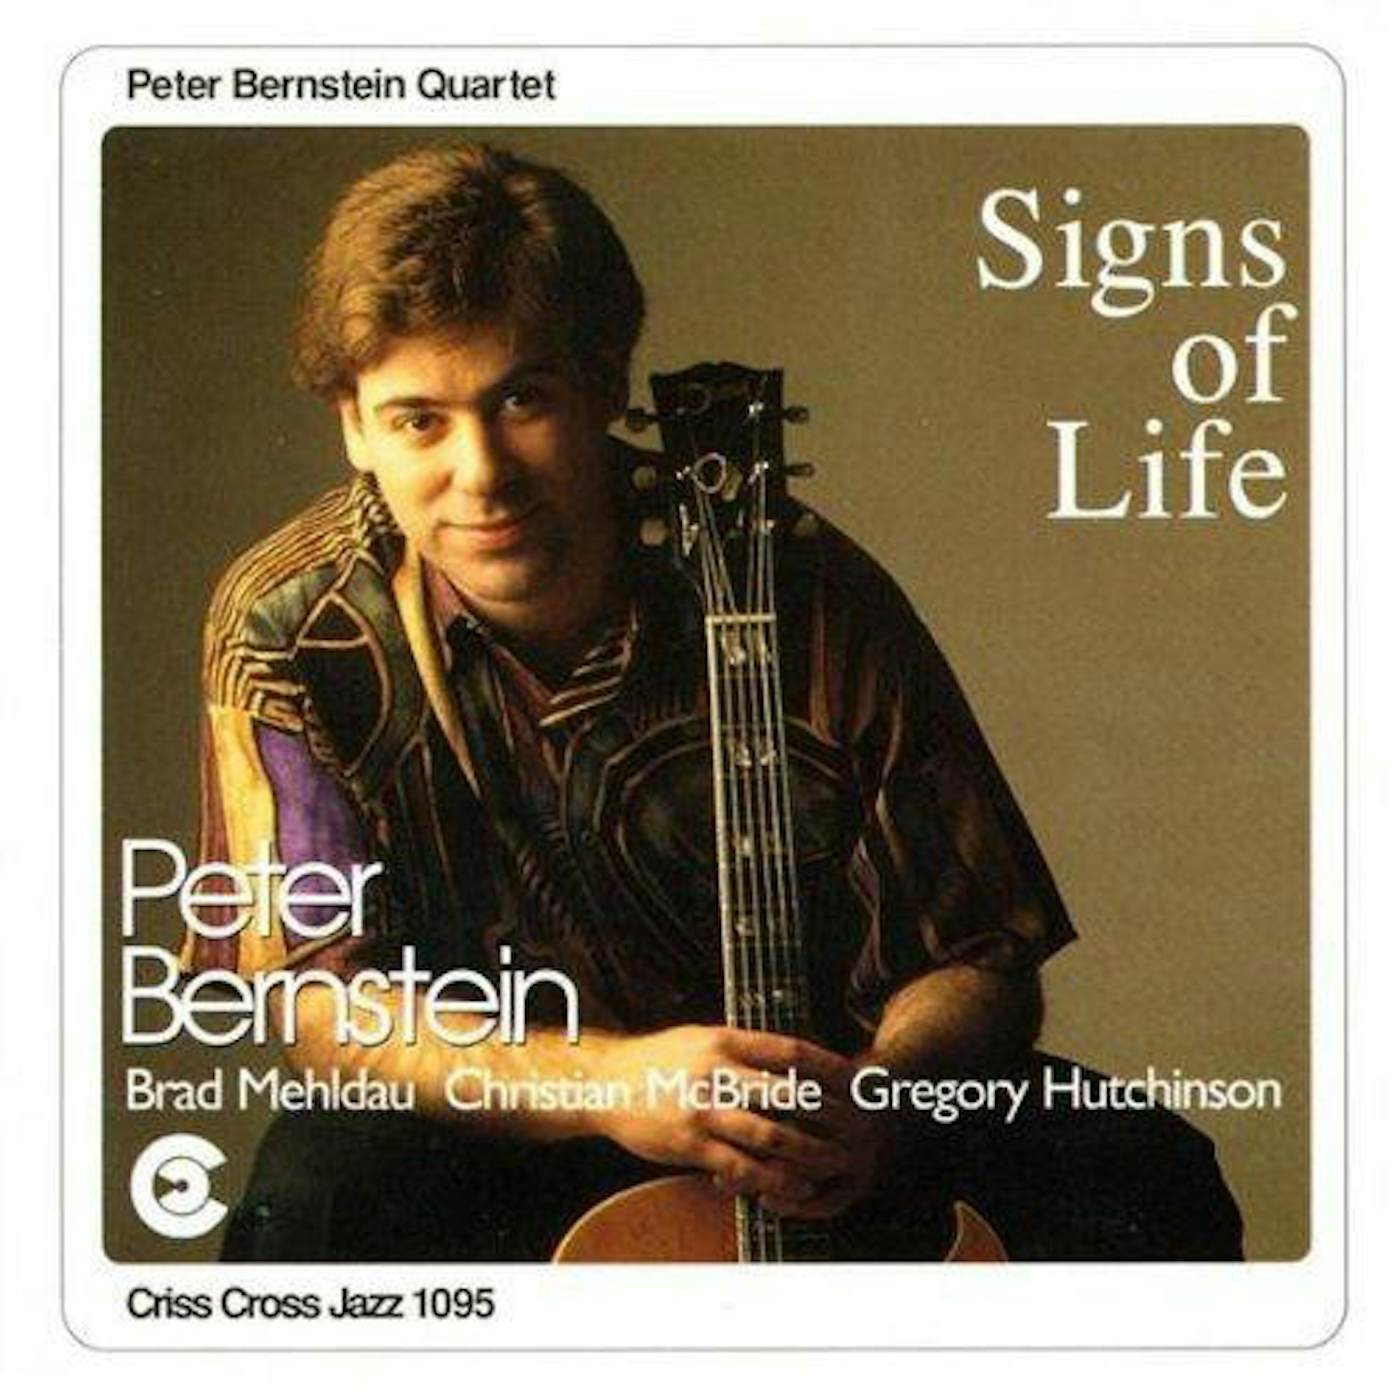 Peter Bernstein SIGNS OF LIFE CD